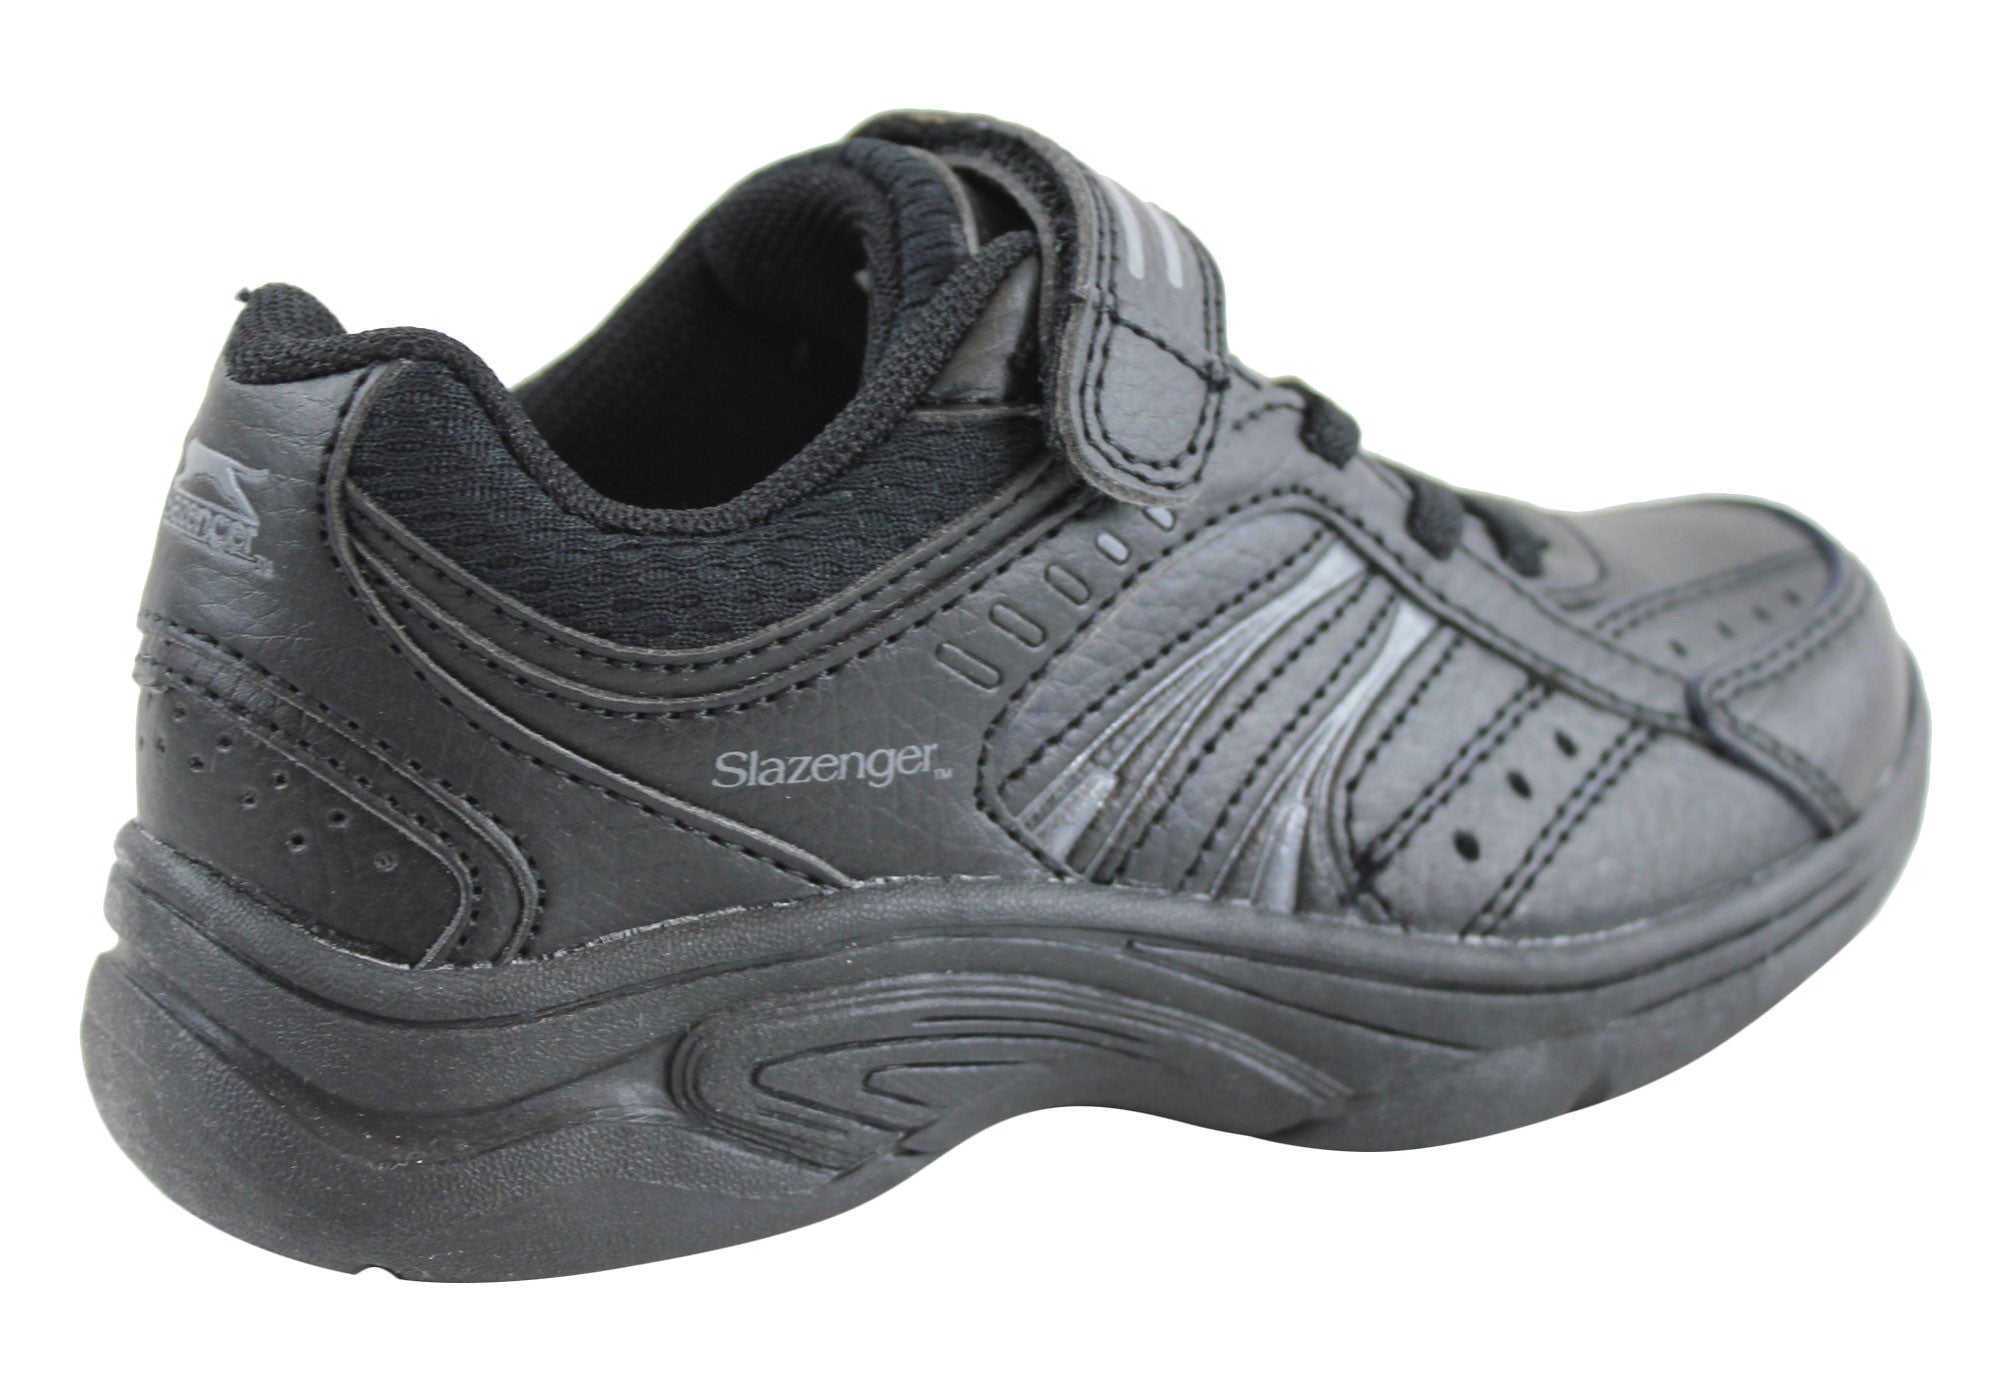 Slazenger Baseline Kids Slip On Leather Sport/School Shoes | Brand ...